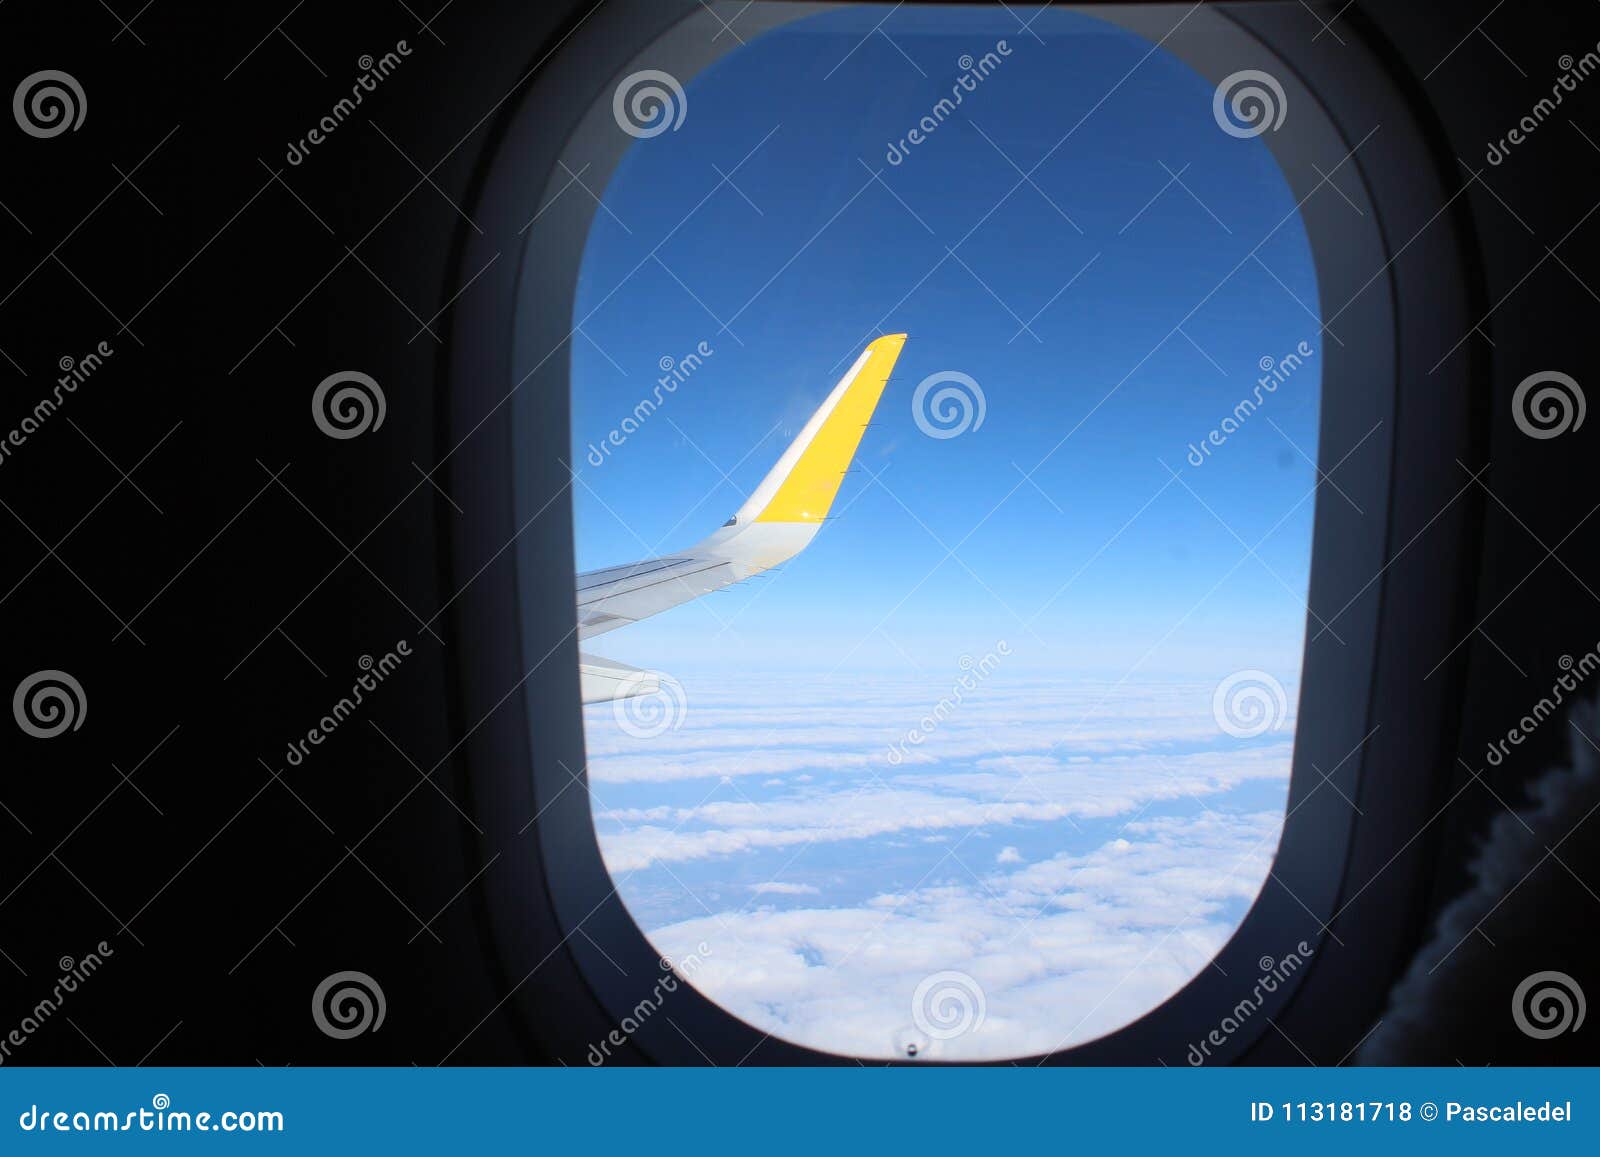 sky vieuw from a plane